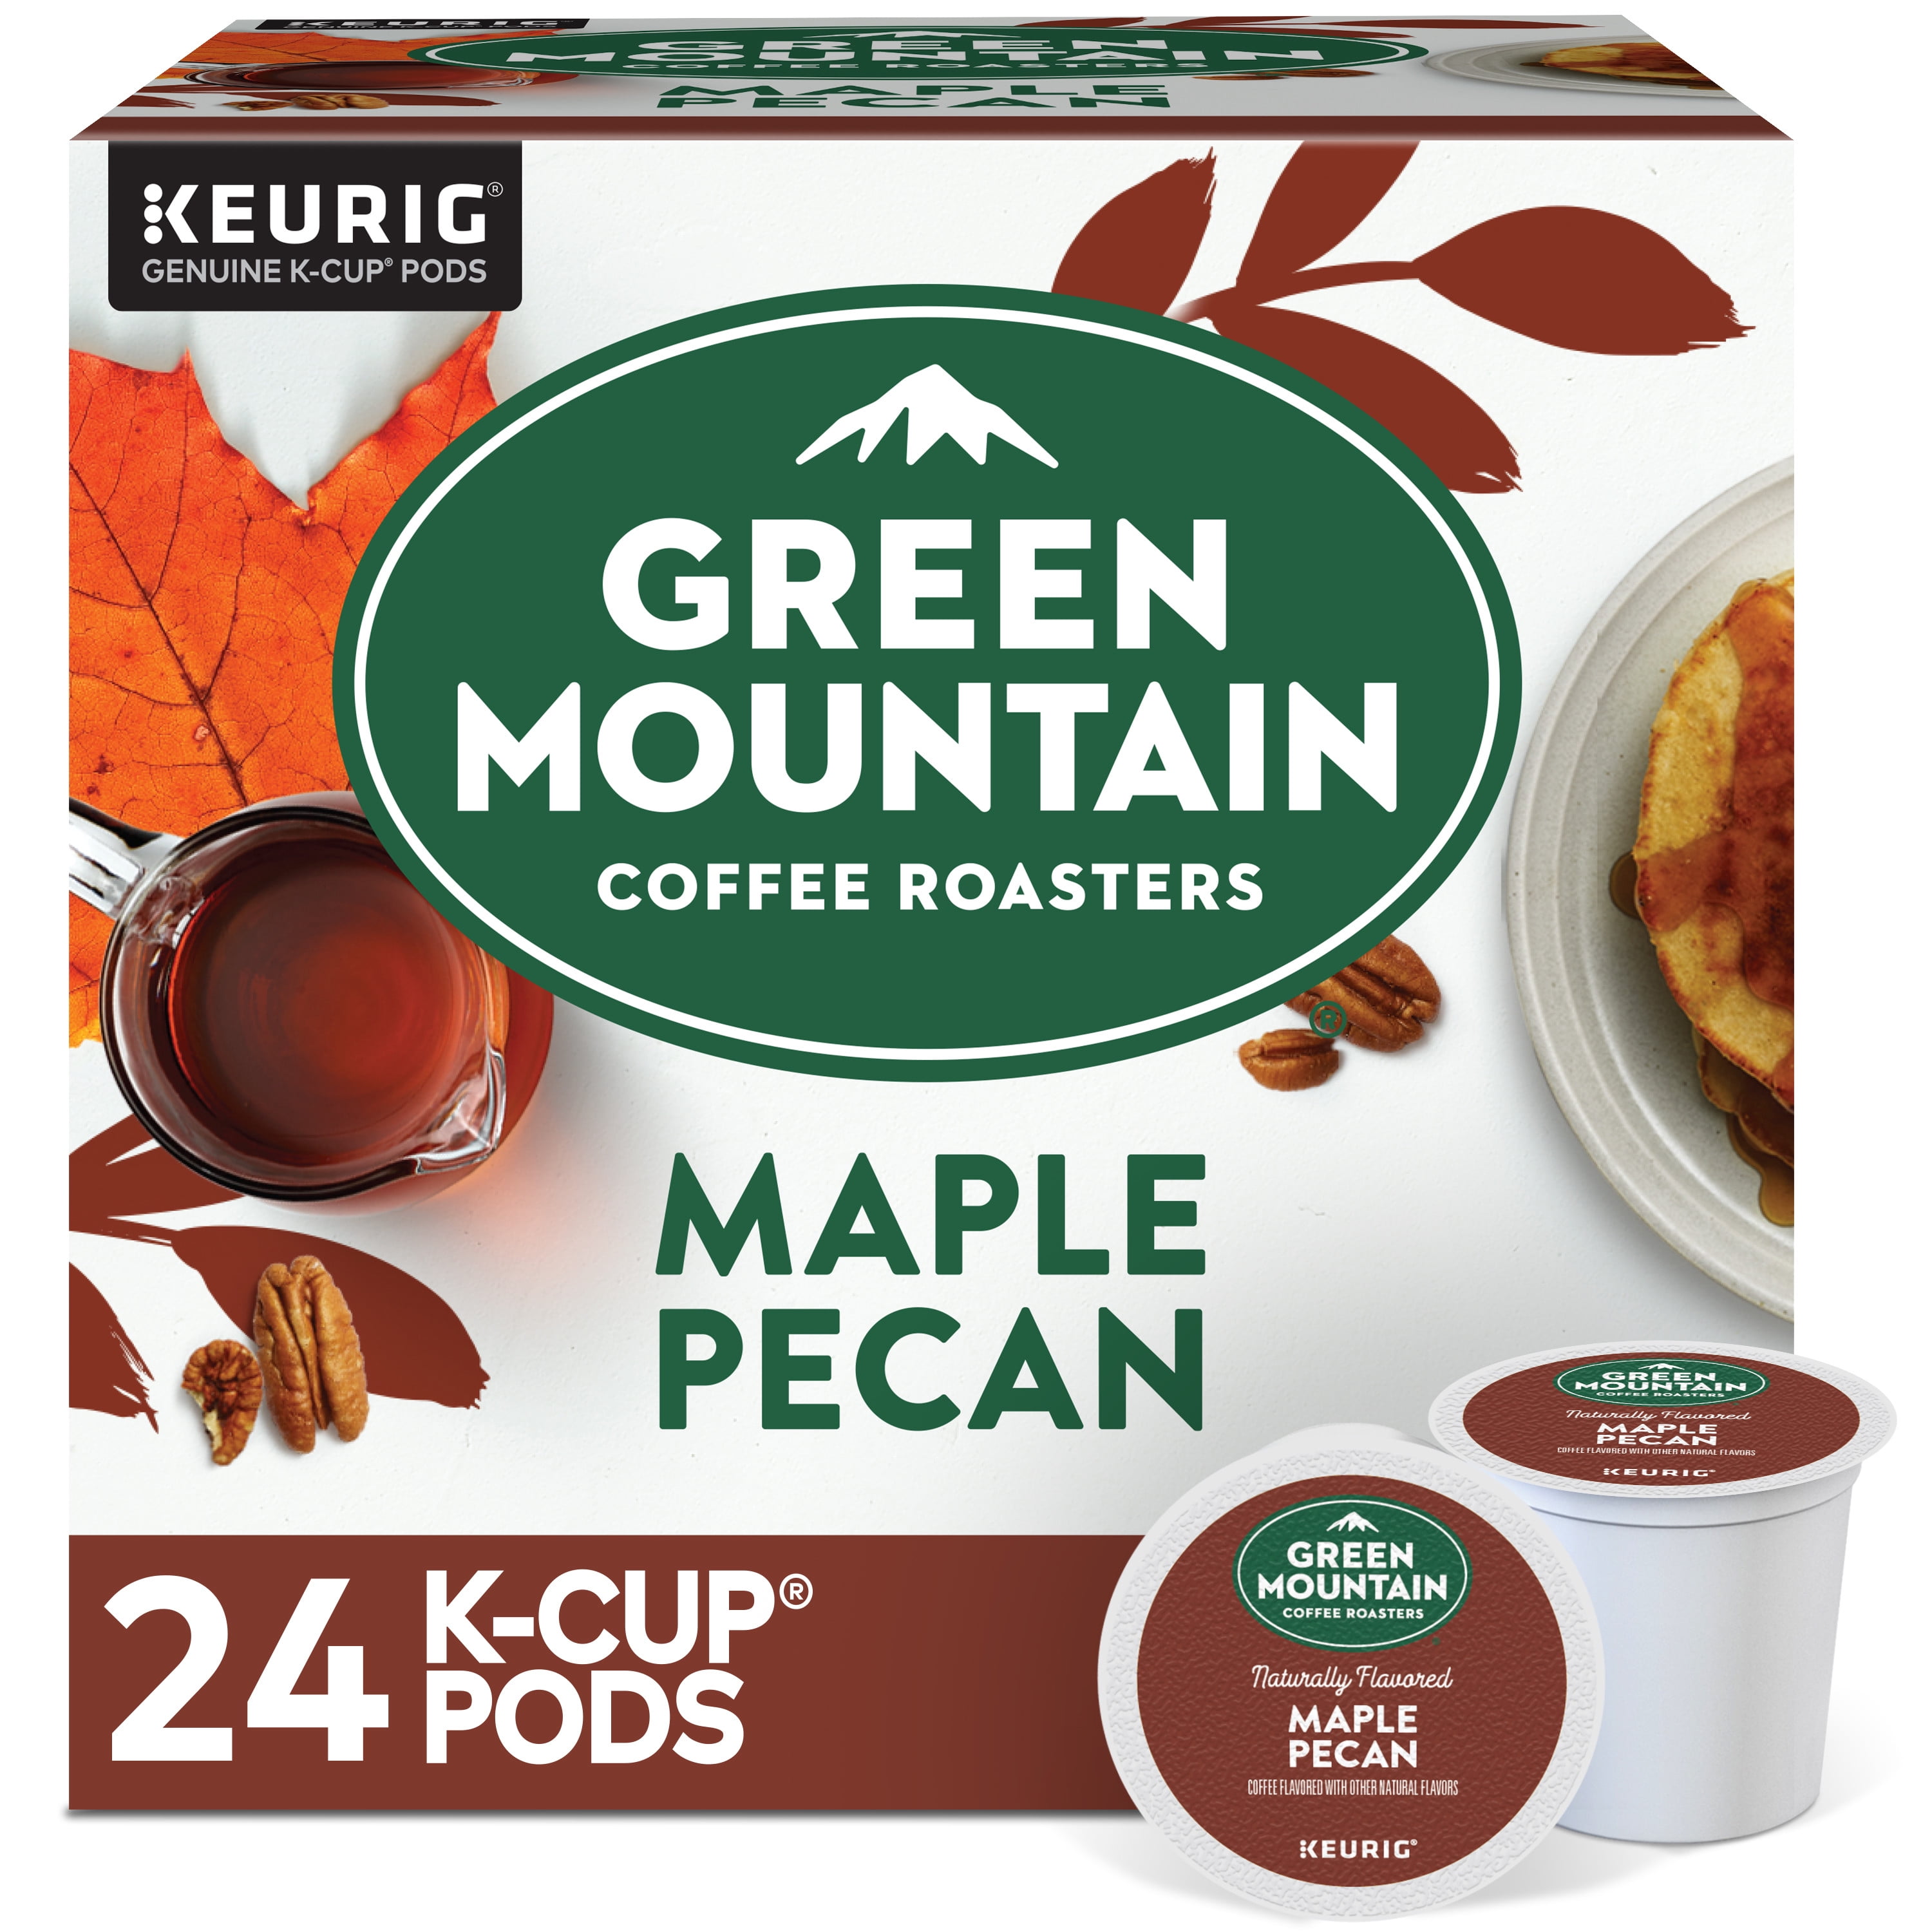 Keurig K-Slim® Single Serve K-Cup Pod Coffee Maker - Storm Blue, 1 ct -  Ralphs